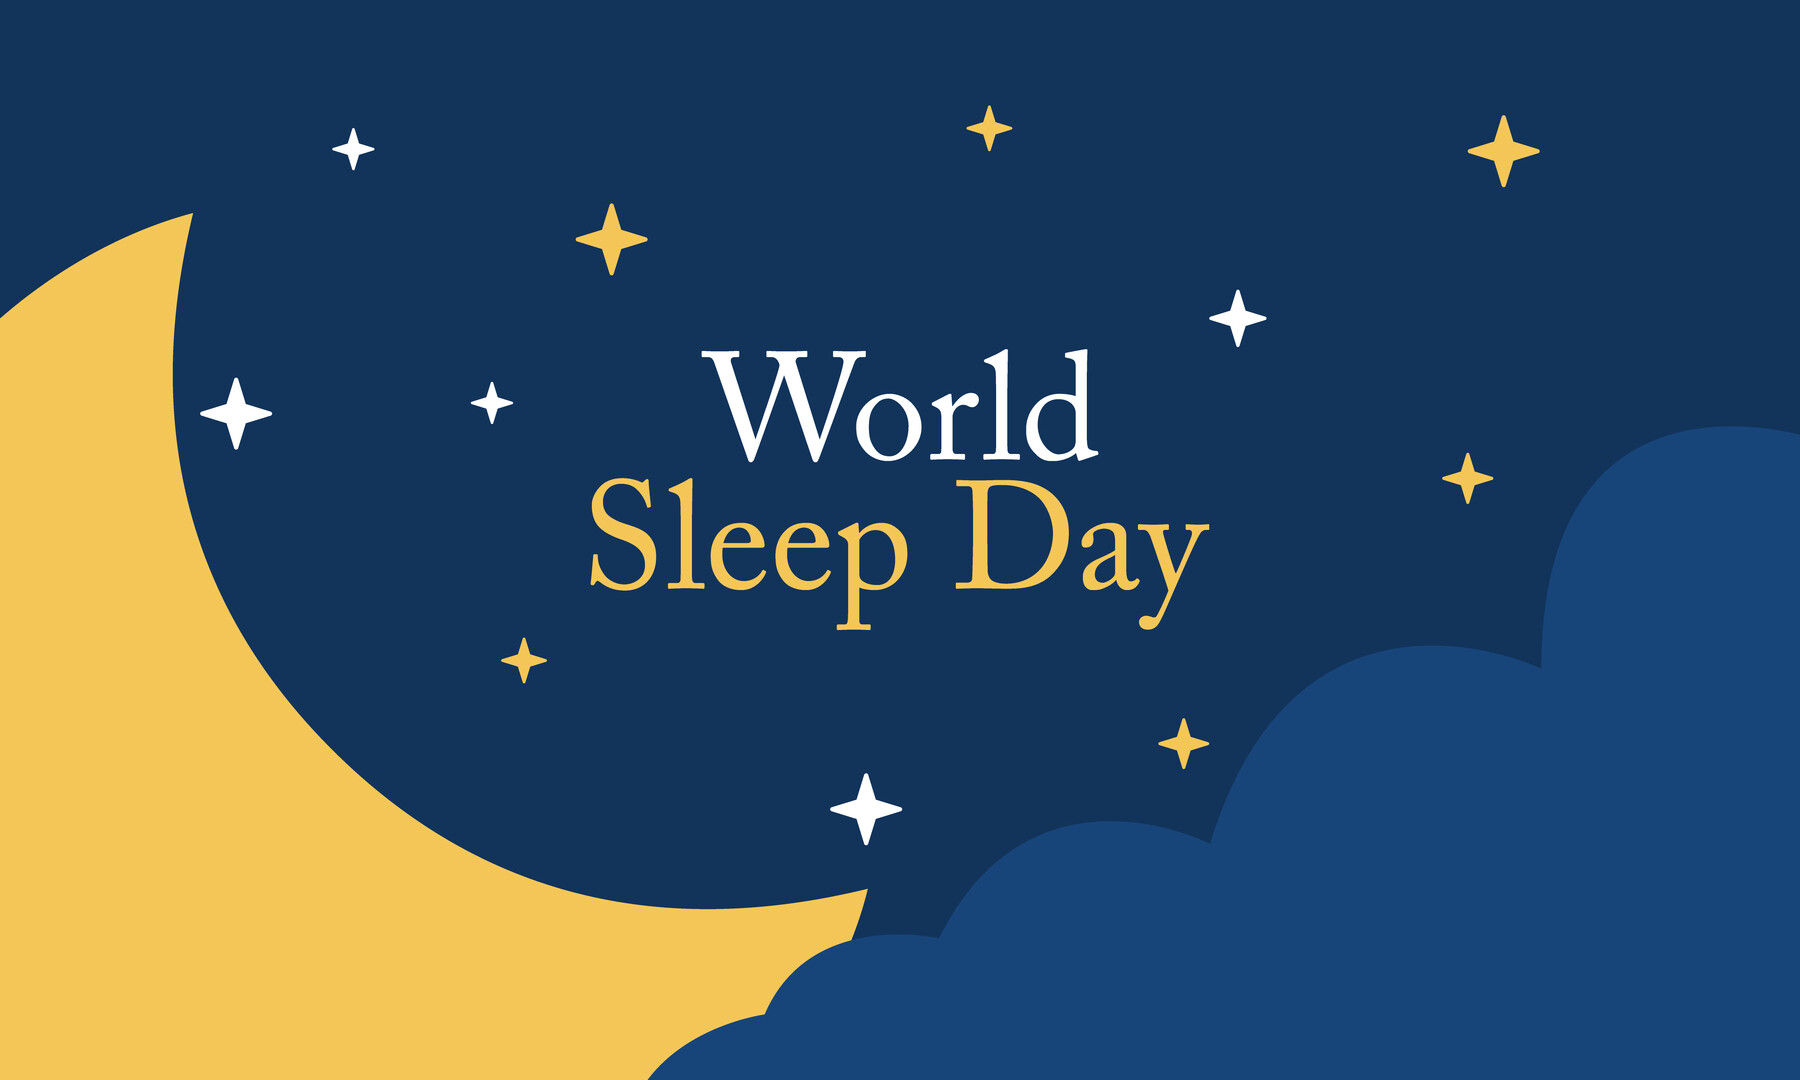 Happy World Sleep Day!